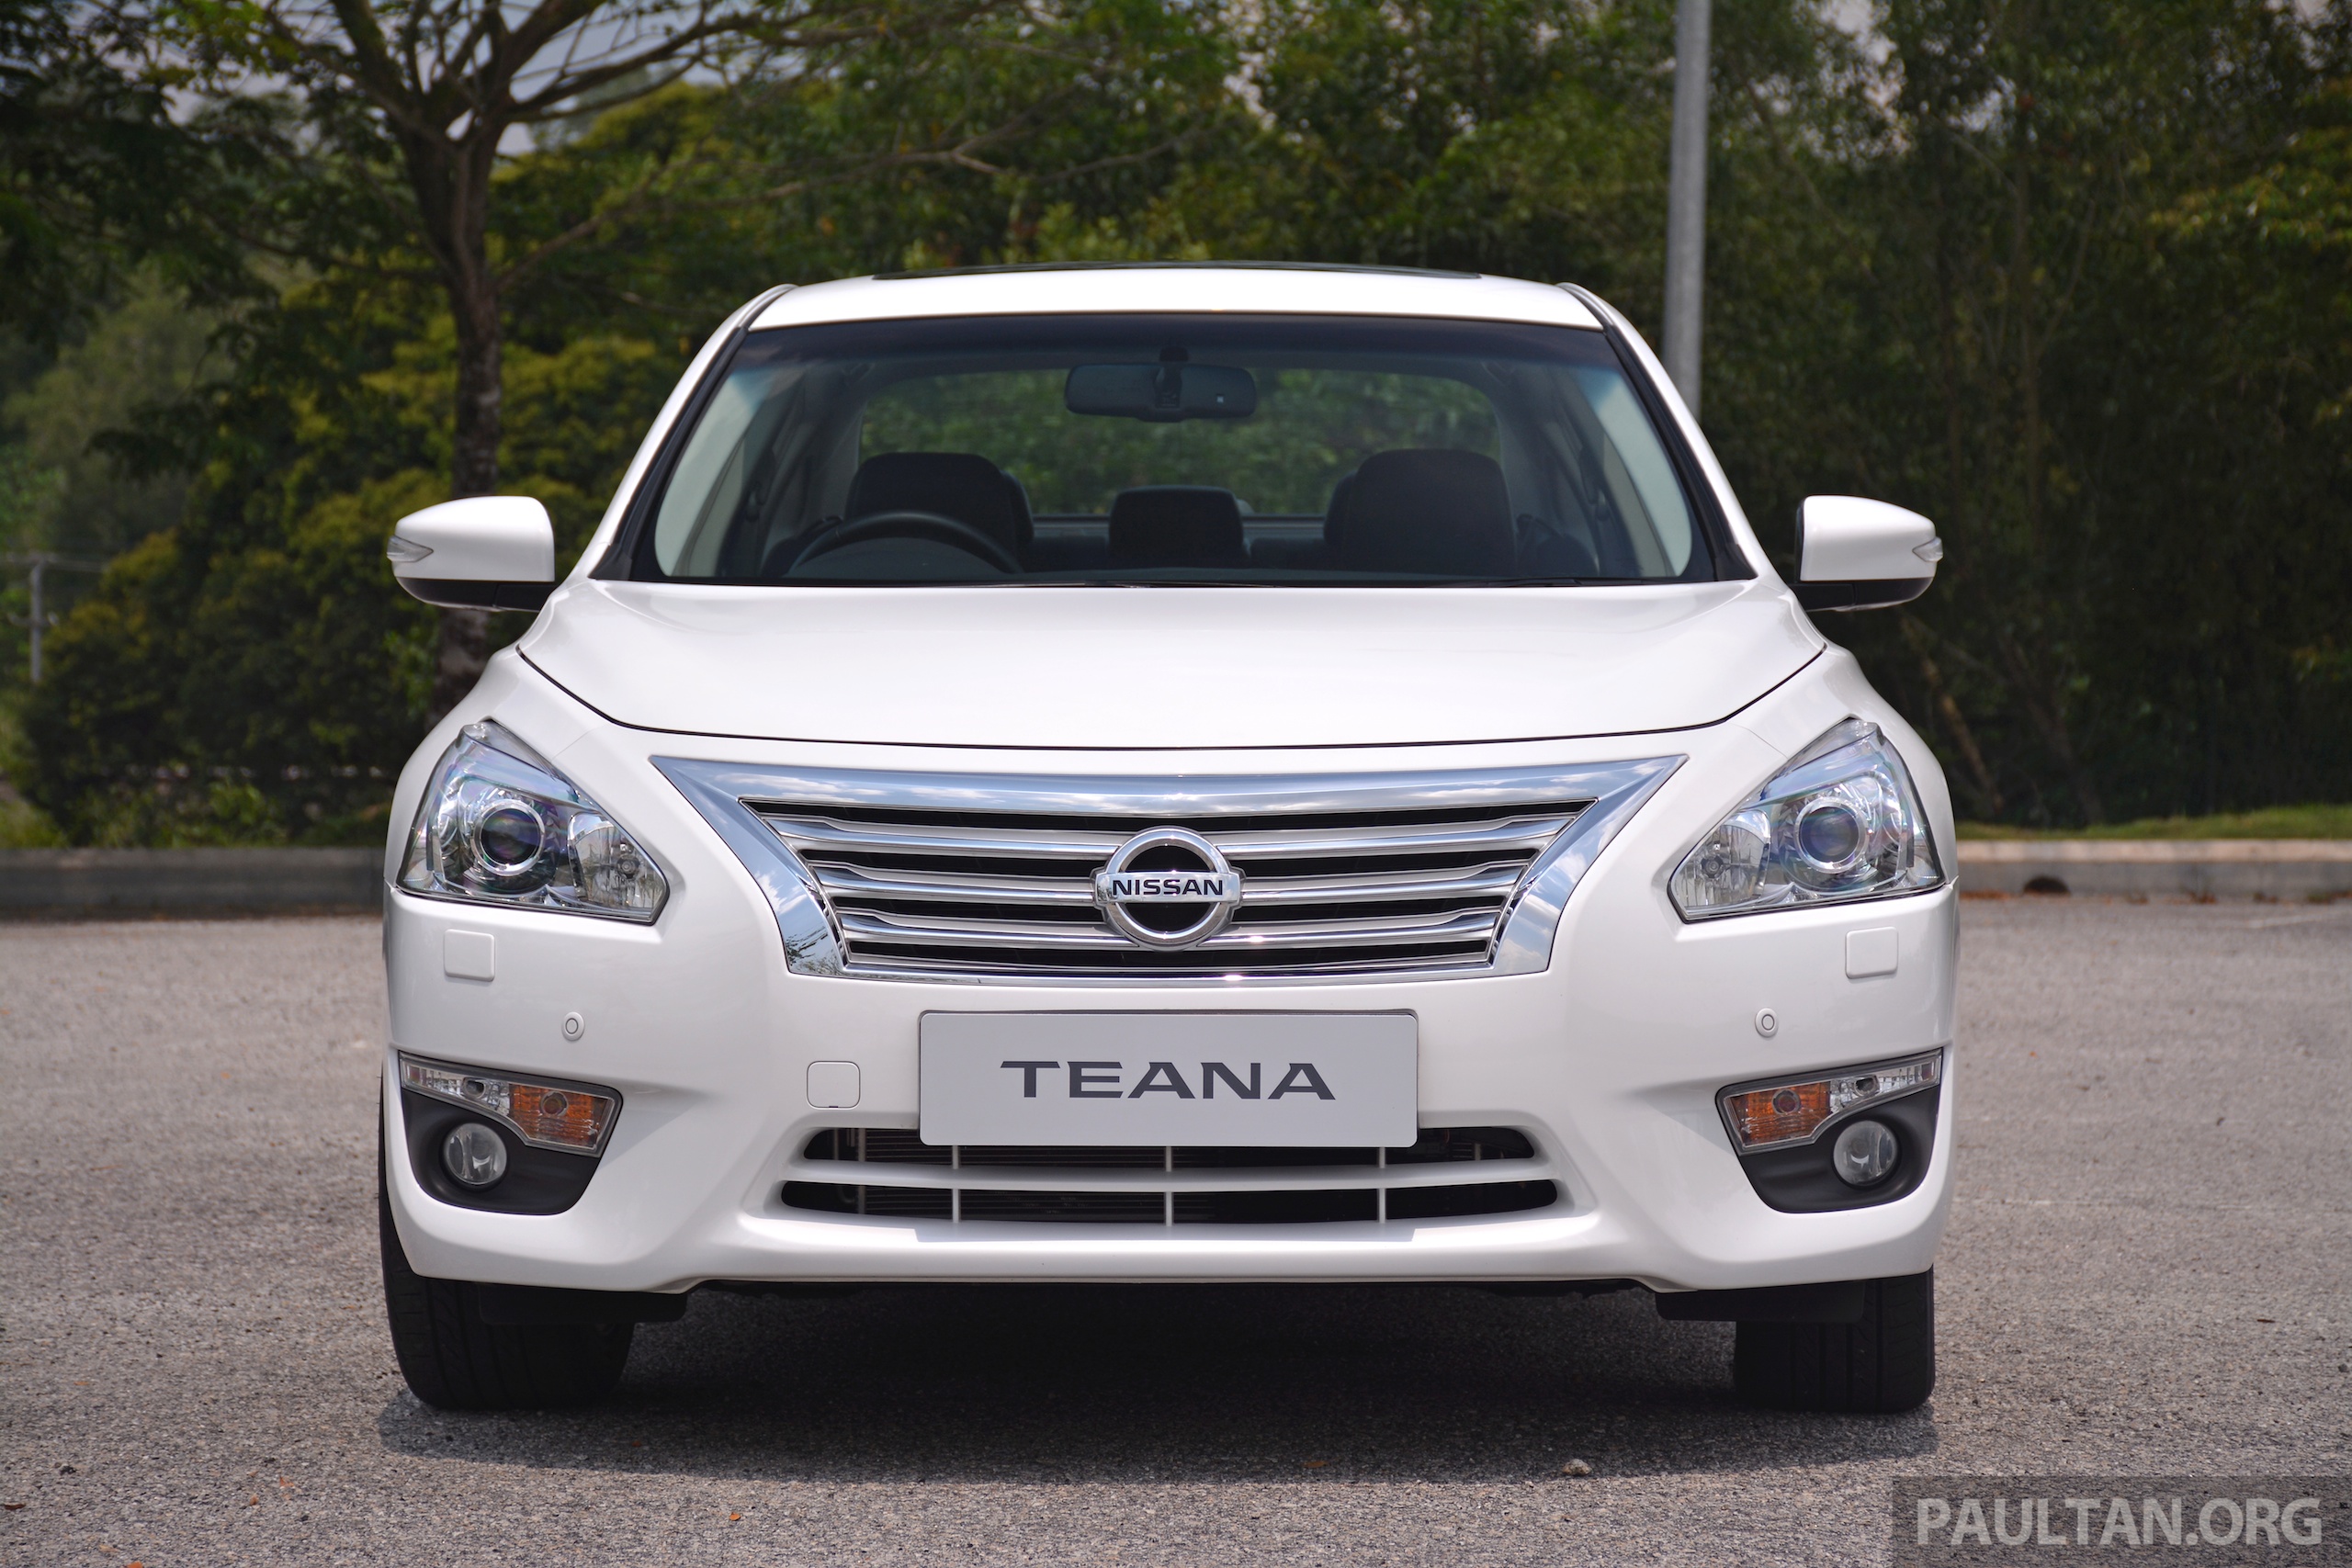 2014 Nissan Teana – L33 on display at selected malls